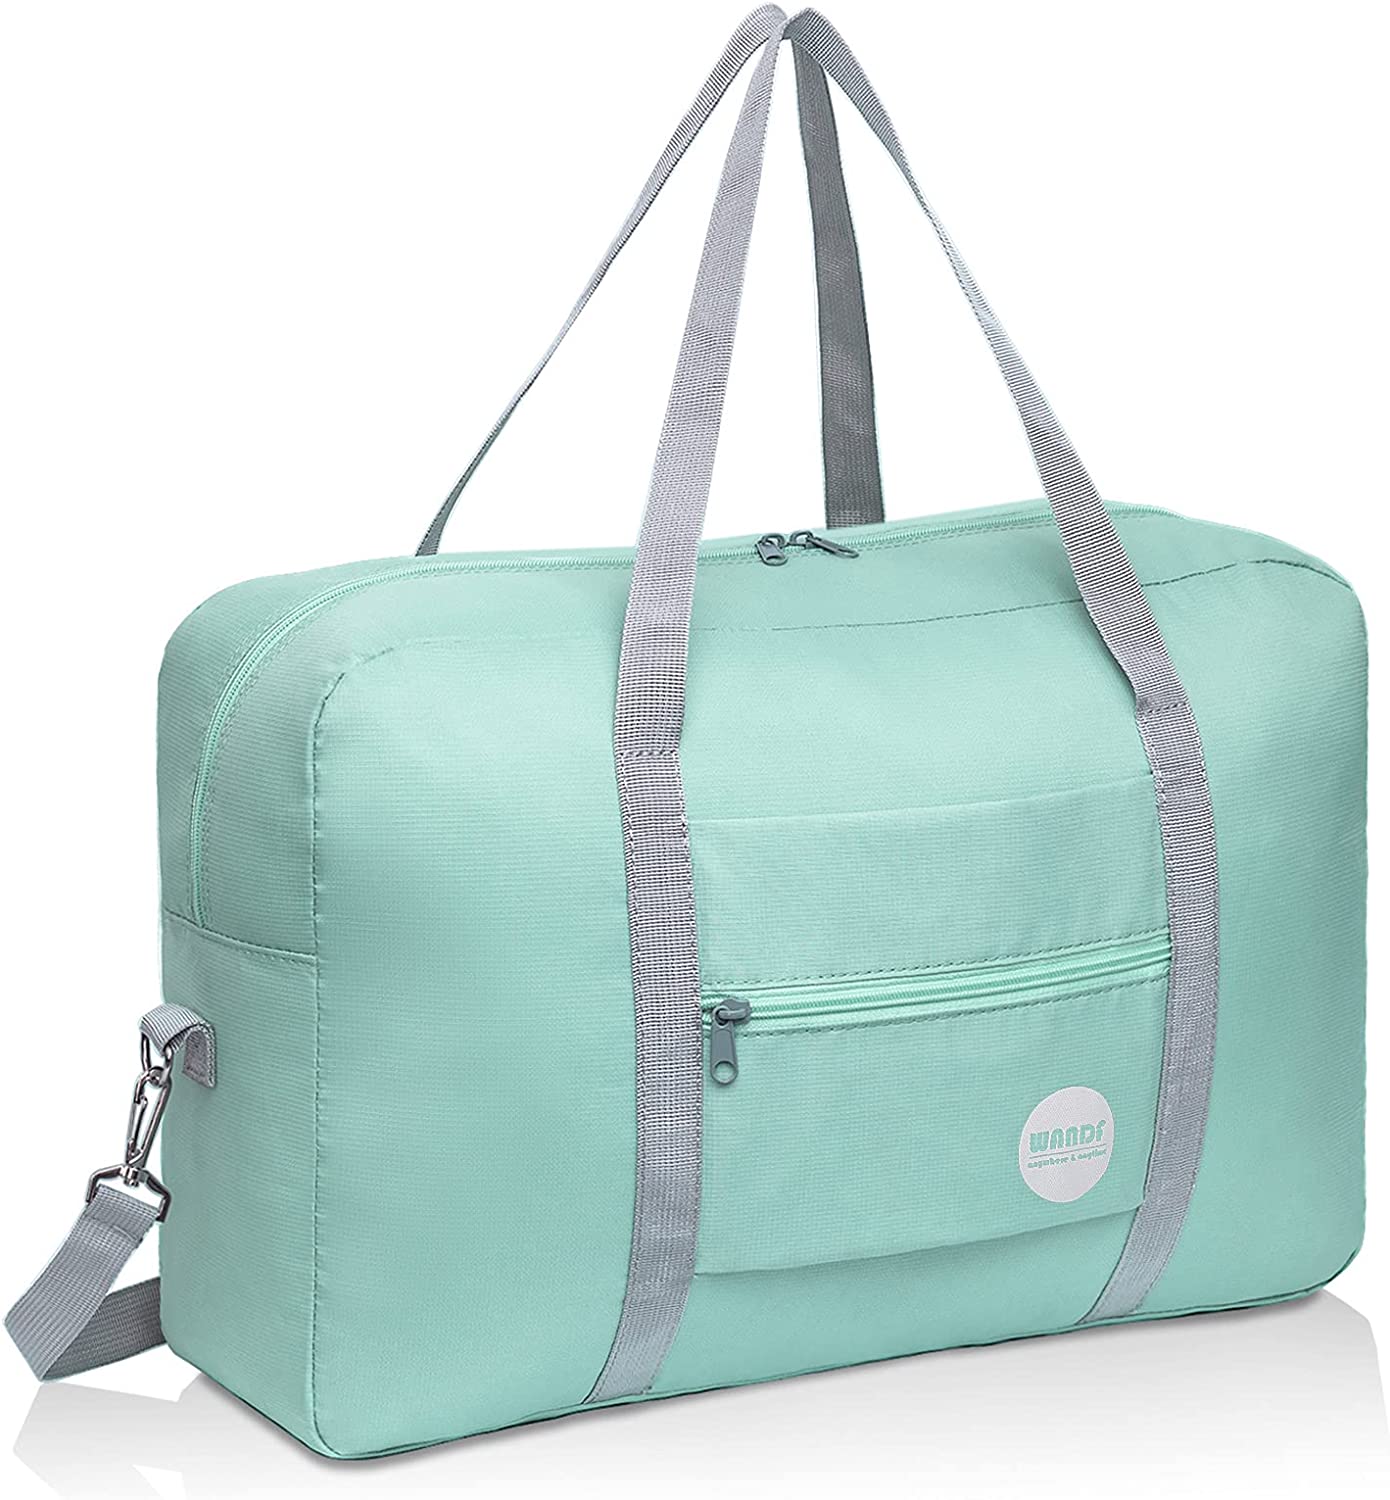 WANDF + Foldable Travel Duffel Bag